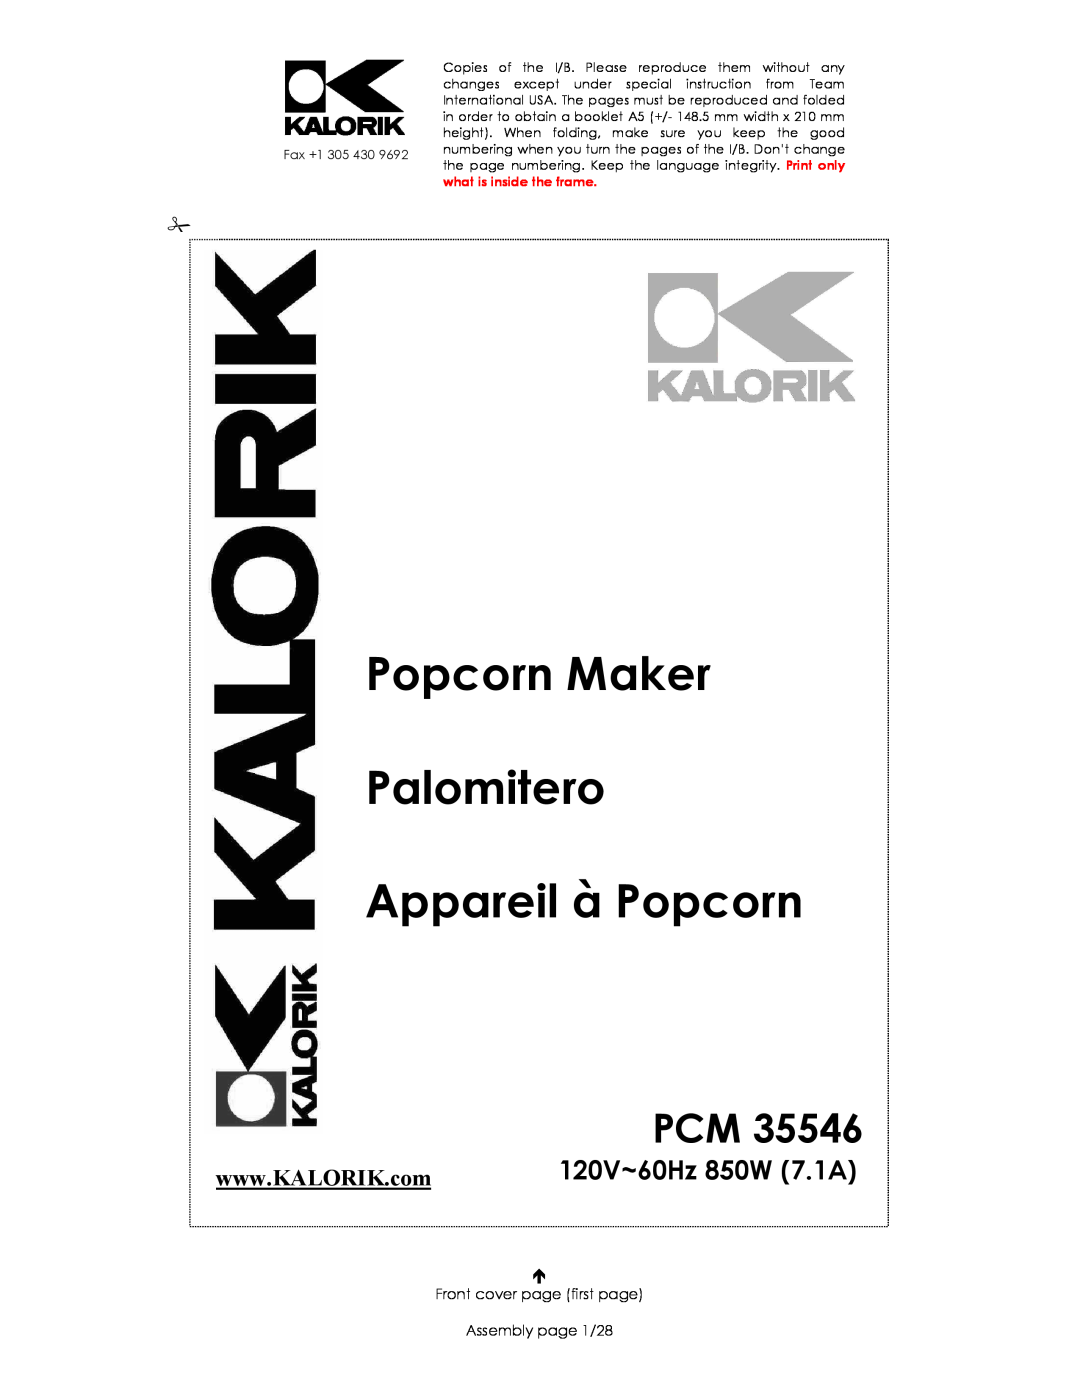 Kalorik PCM 35546 manual 120V~60Hz 850W 7.1A, Popcorn Maker Palomitero Appareil à Popcorn 